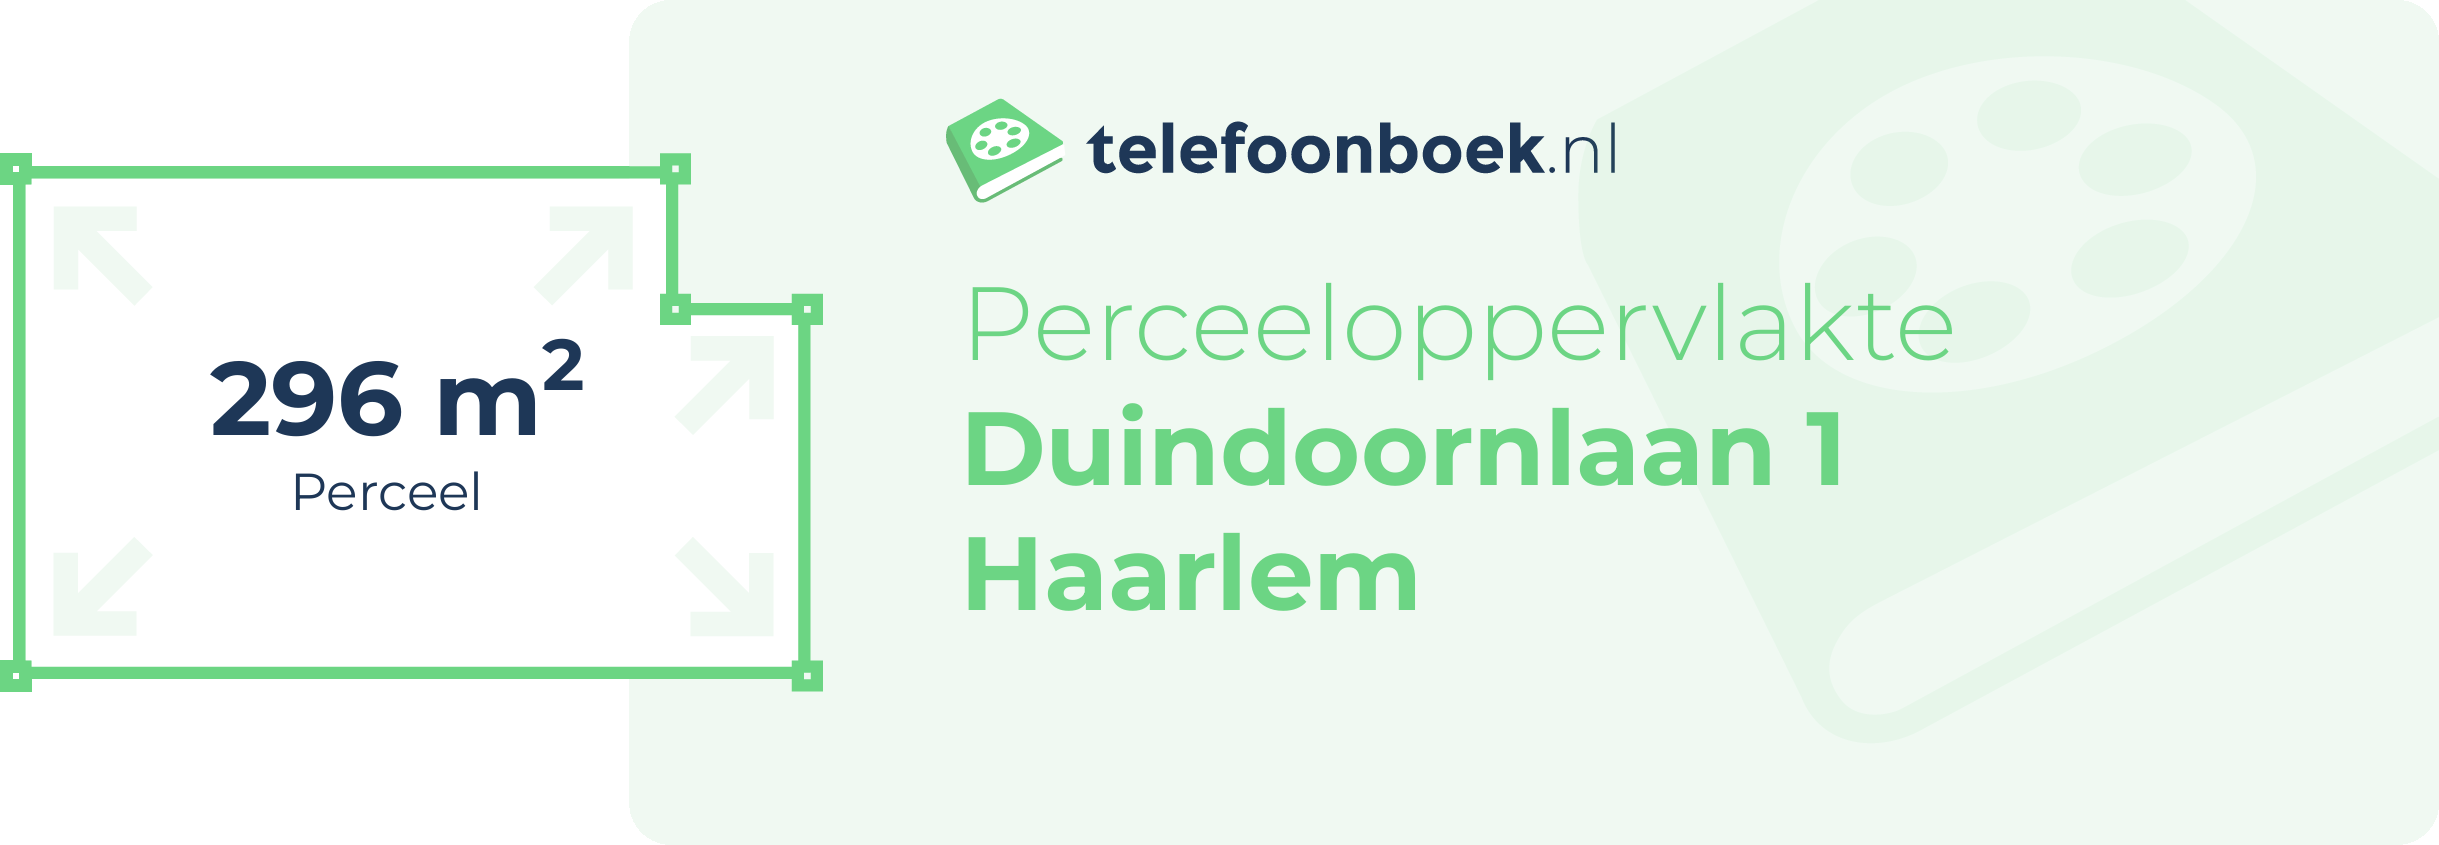 Perceeloppervlakte Duindoornlaan 1 Haarlem